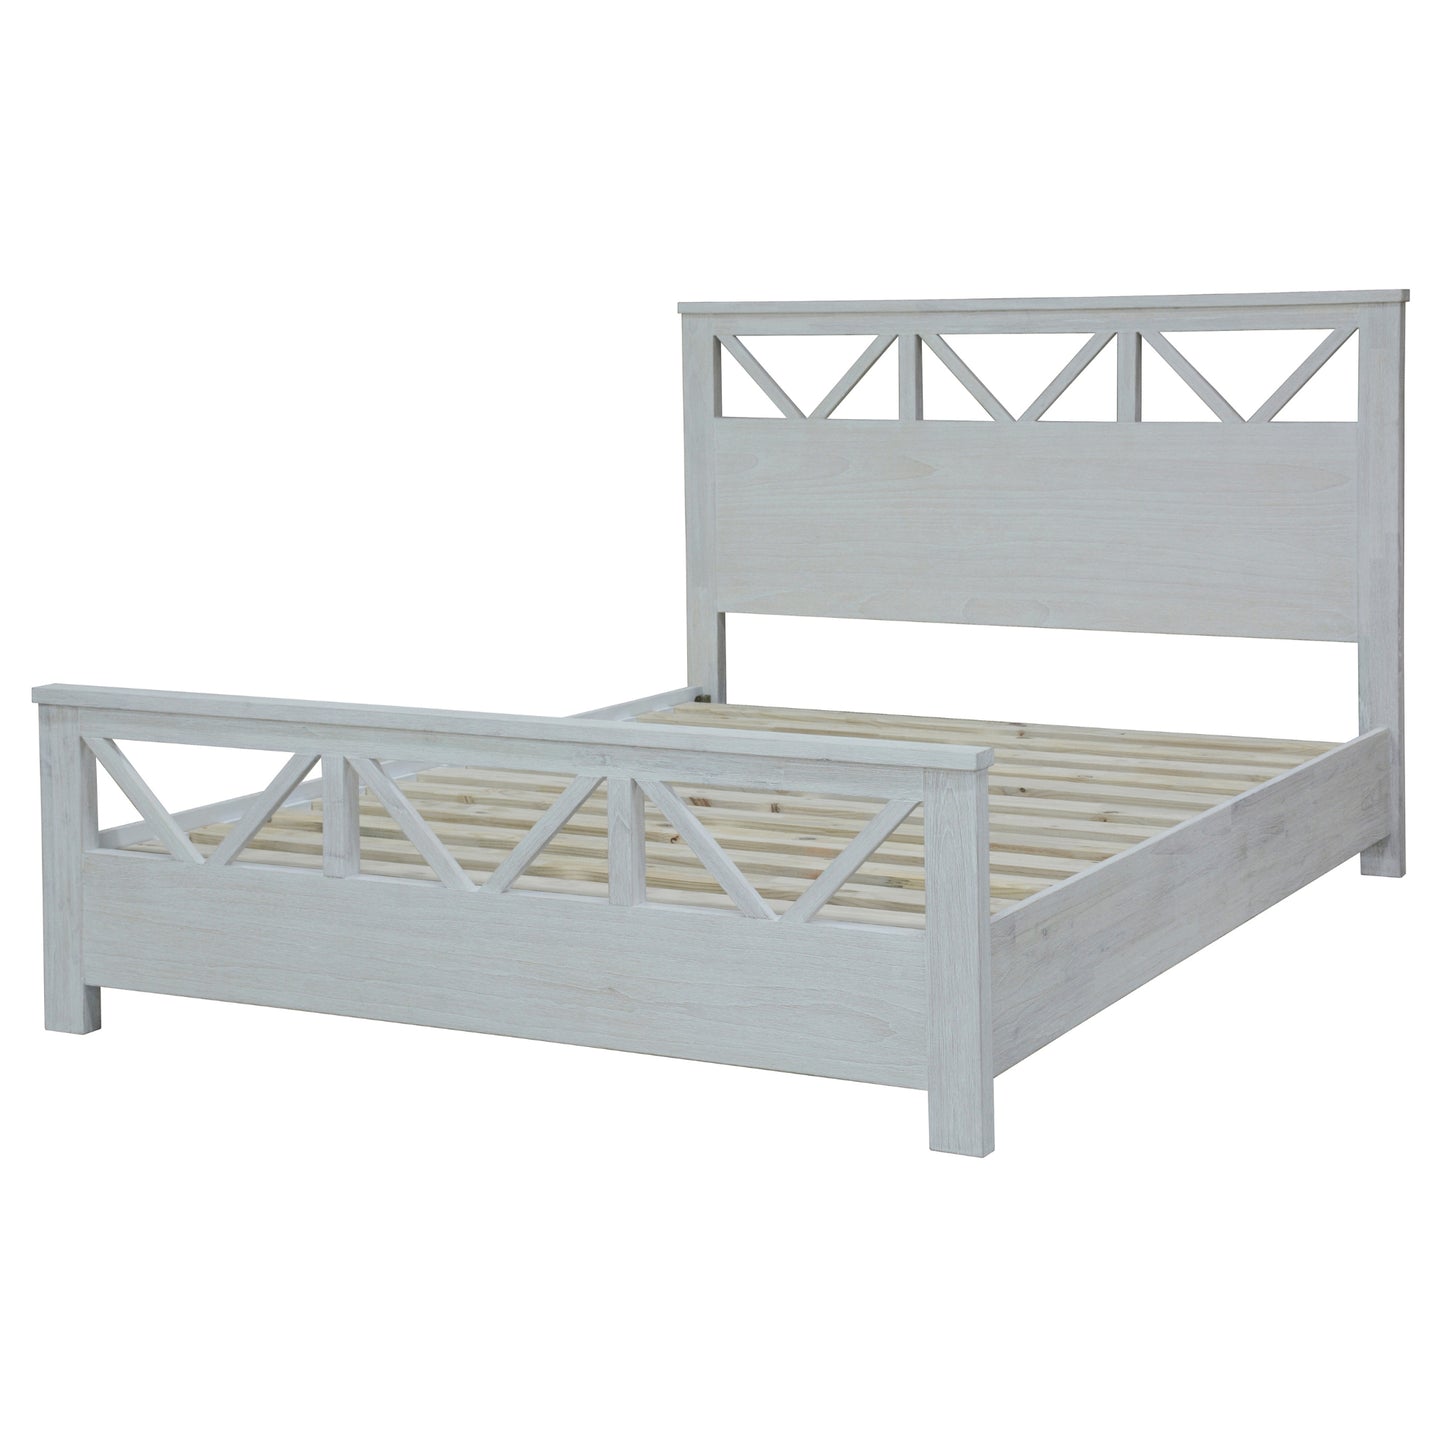 Myer 5pc Double Bed Suite Bedside Dresser Bedroom Furniture Package White Wash